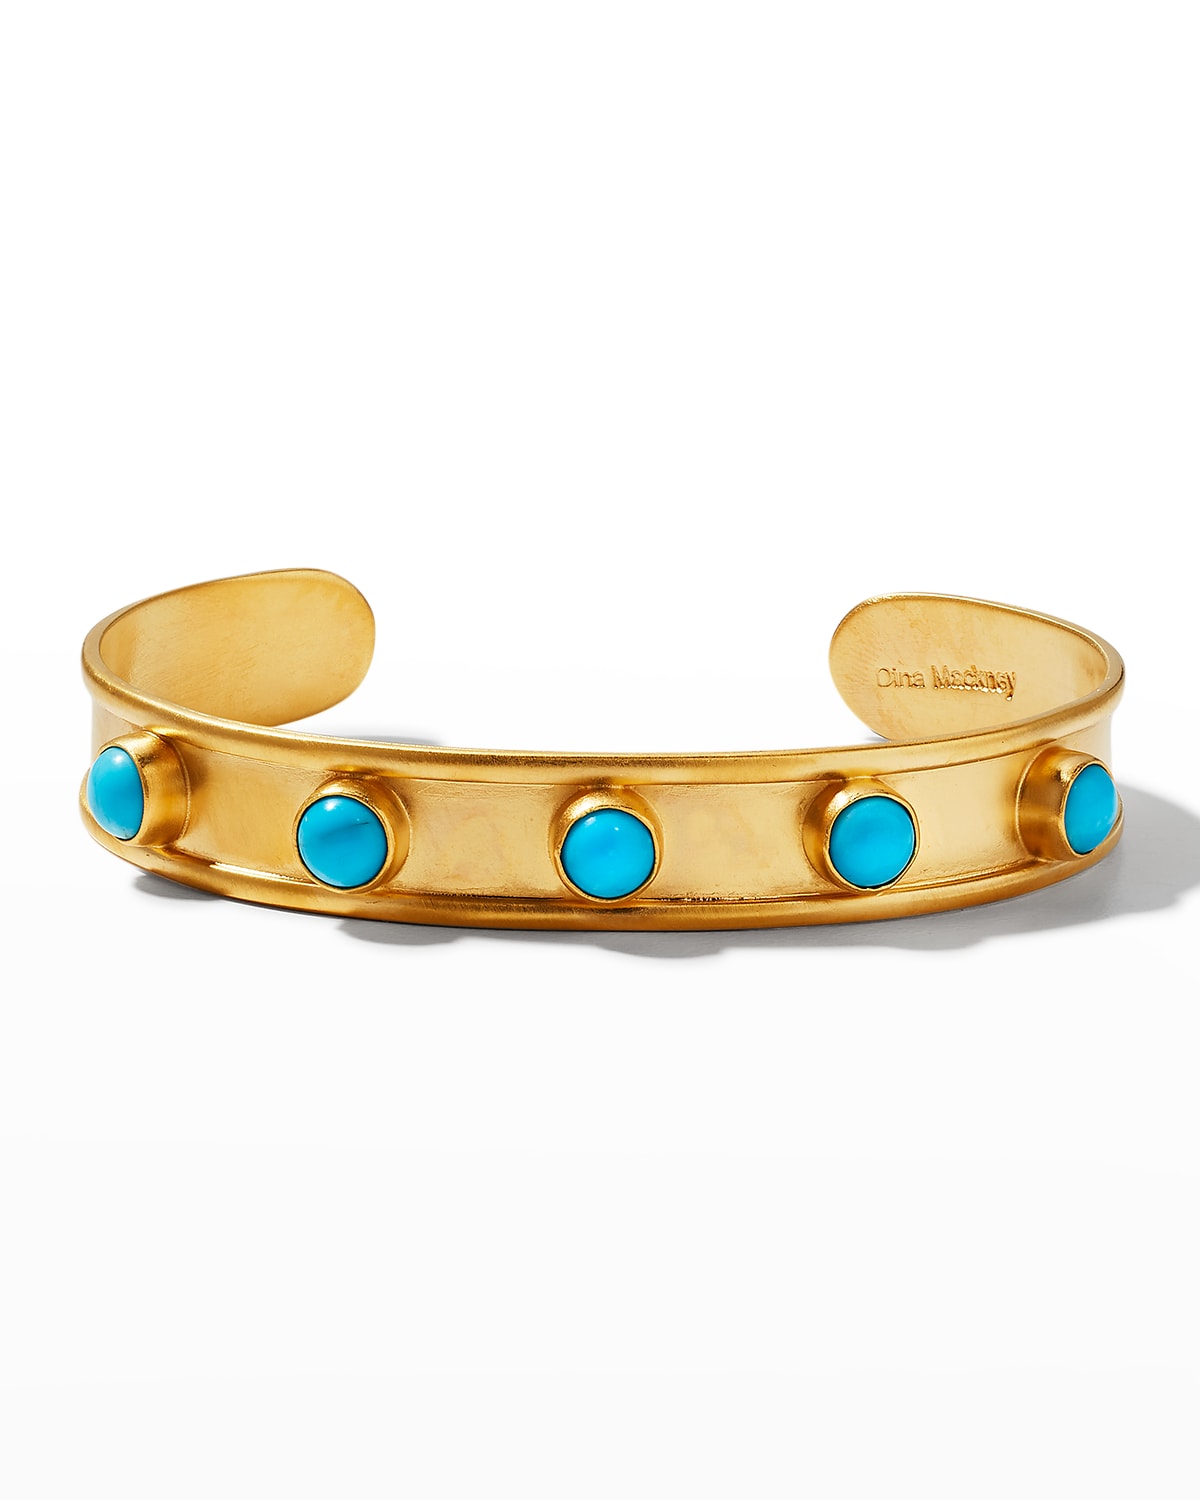 Dina Mackney Mini Turquoise Cuff In Gold